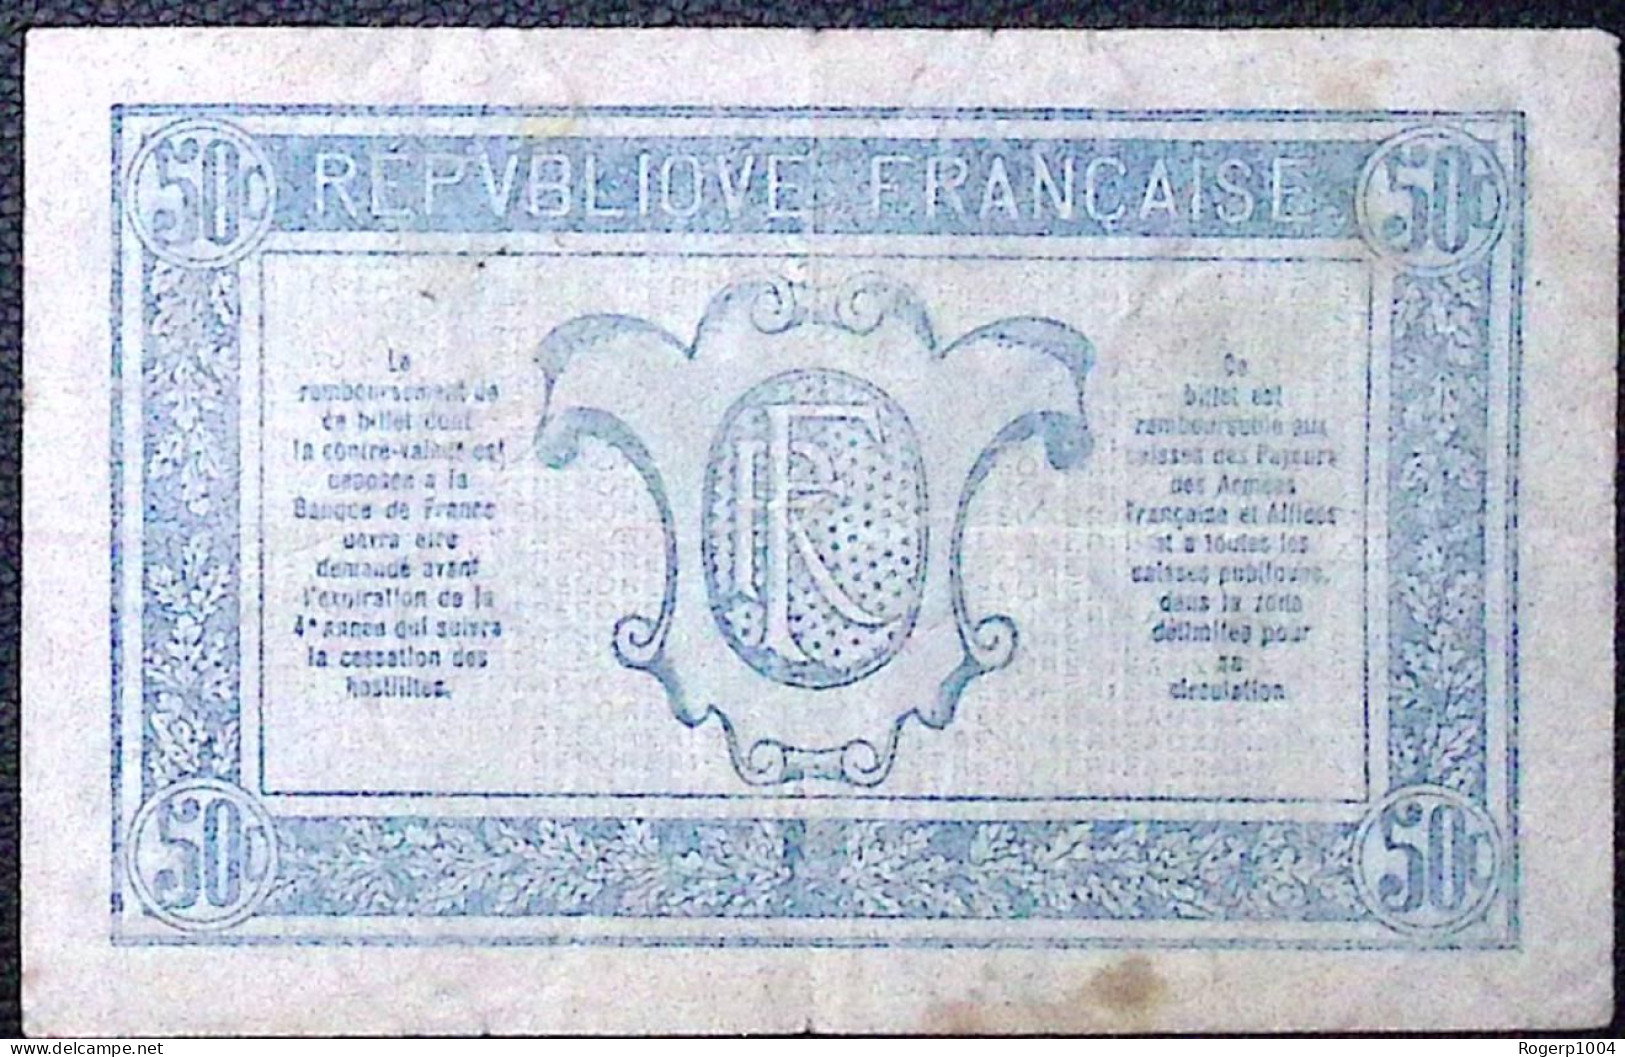 FRANCE * TRESORERIE AUX ARMEES * 1919 * Série Y * Fay. VF.02.08 * État/Grade TB+/FF - 1917-1919 Army Treasury